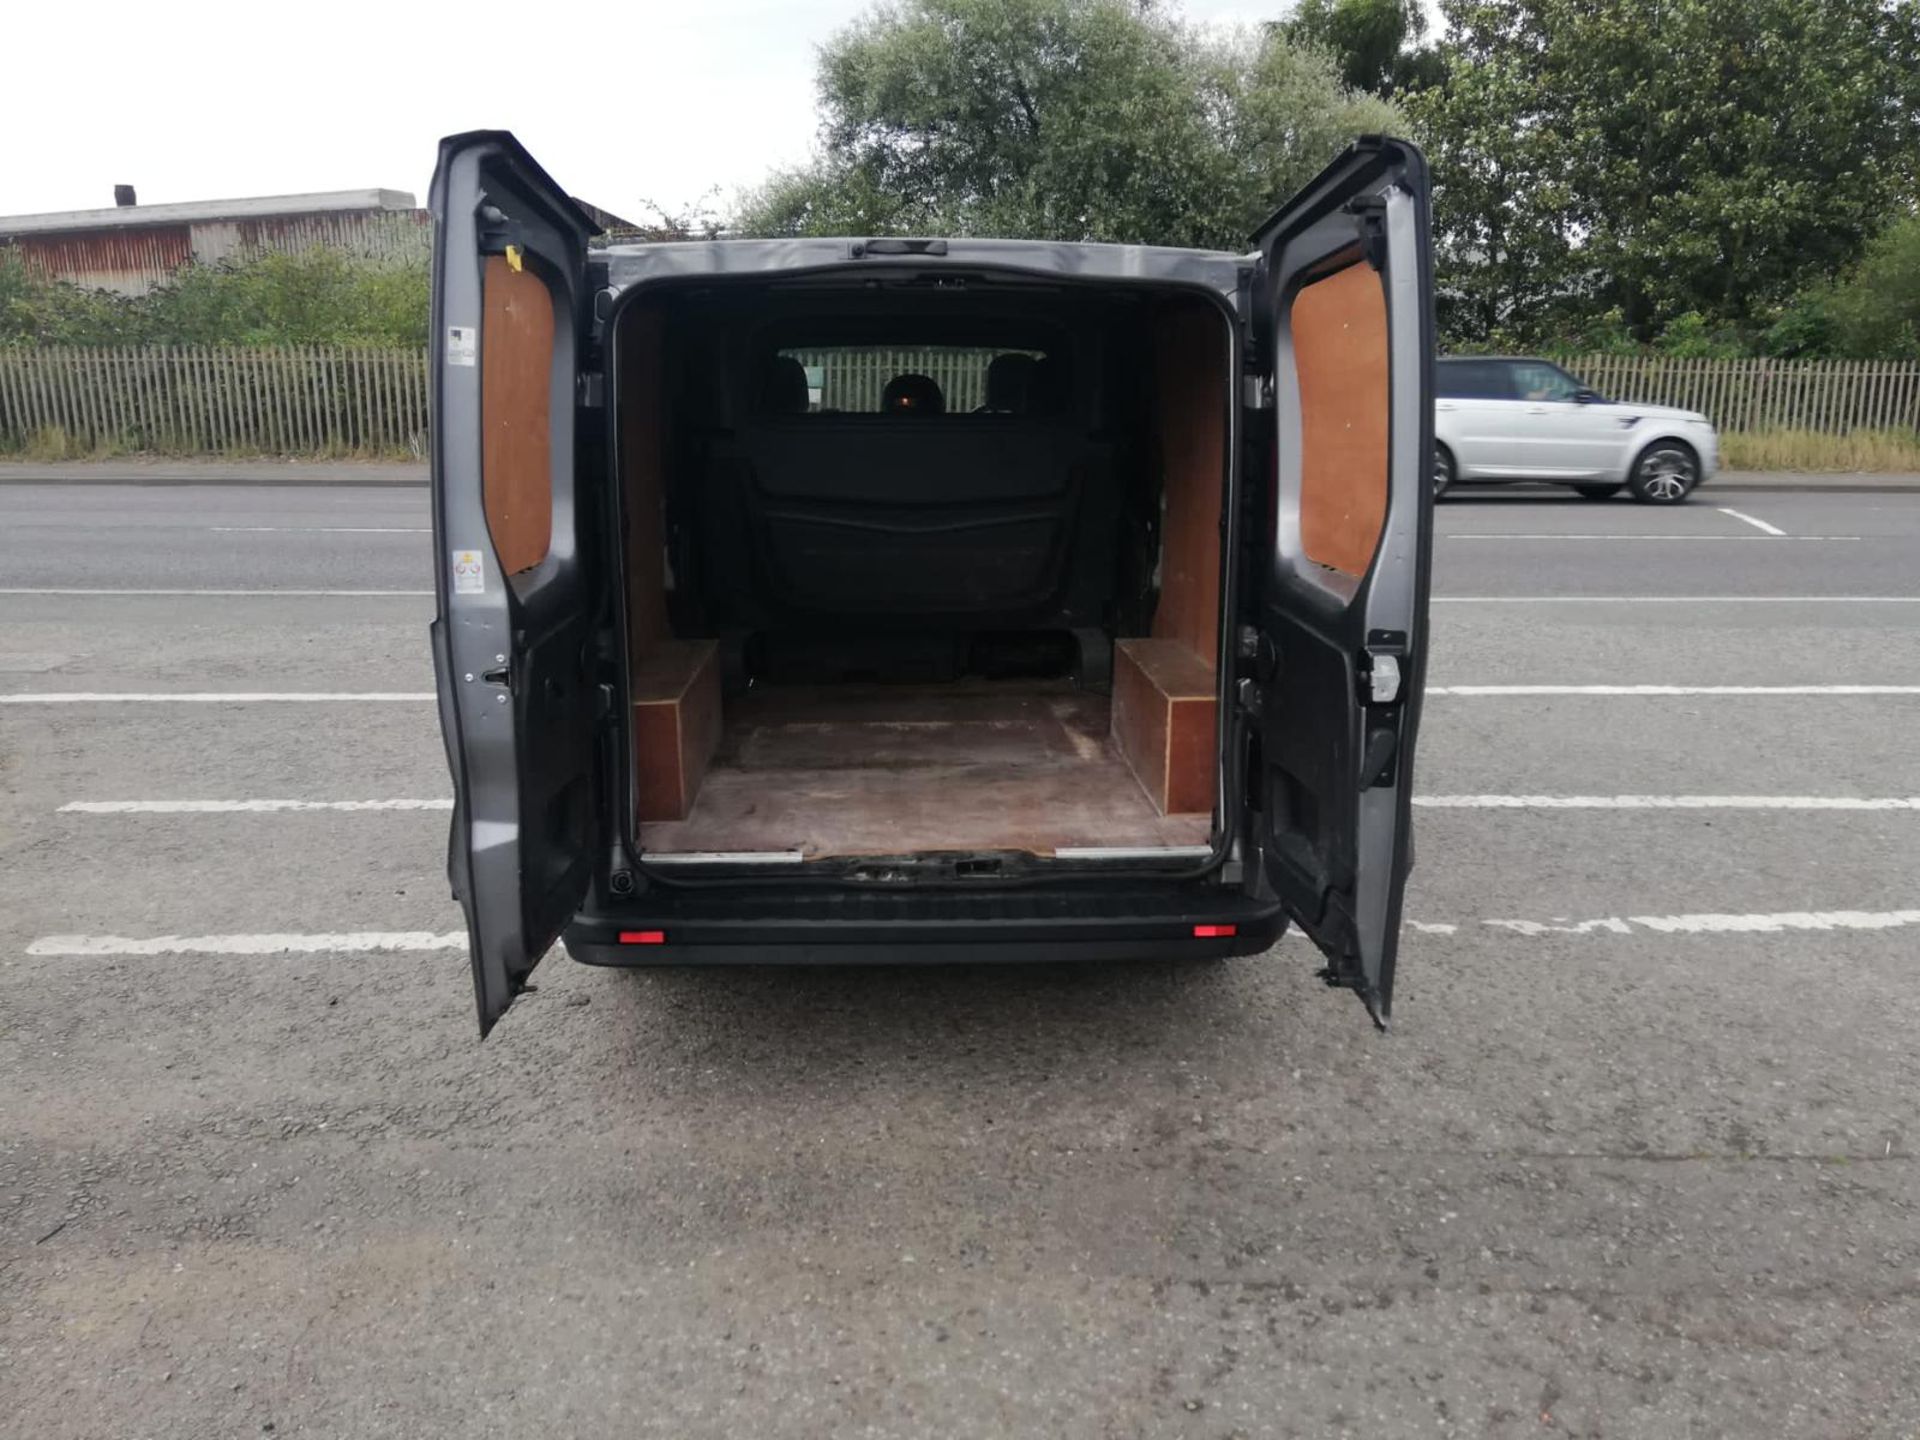 2019 19 Vauxhall vivaro crew cab Panel van - 114k miles - Euro 6 - 6 seats - Air con - Image 9 of 11